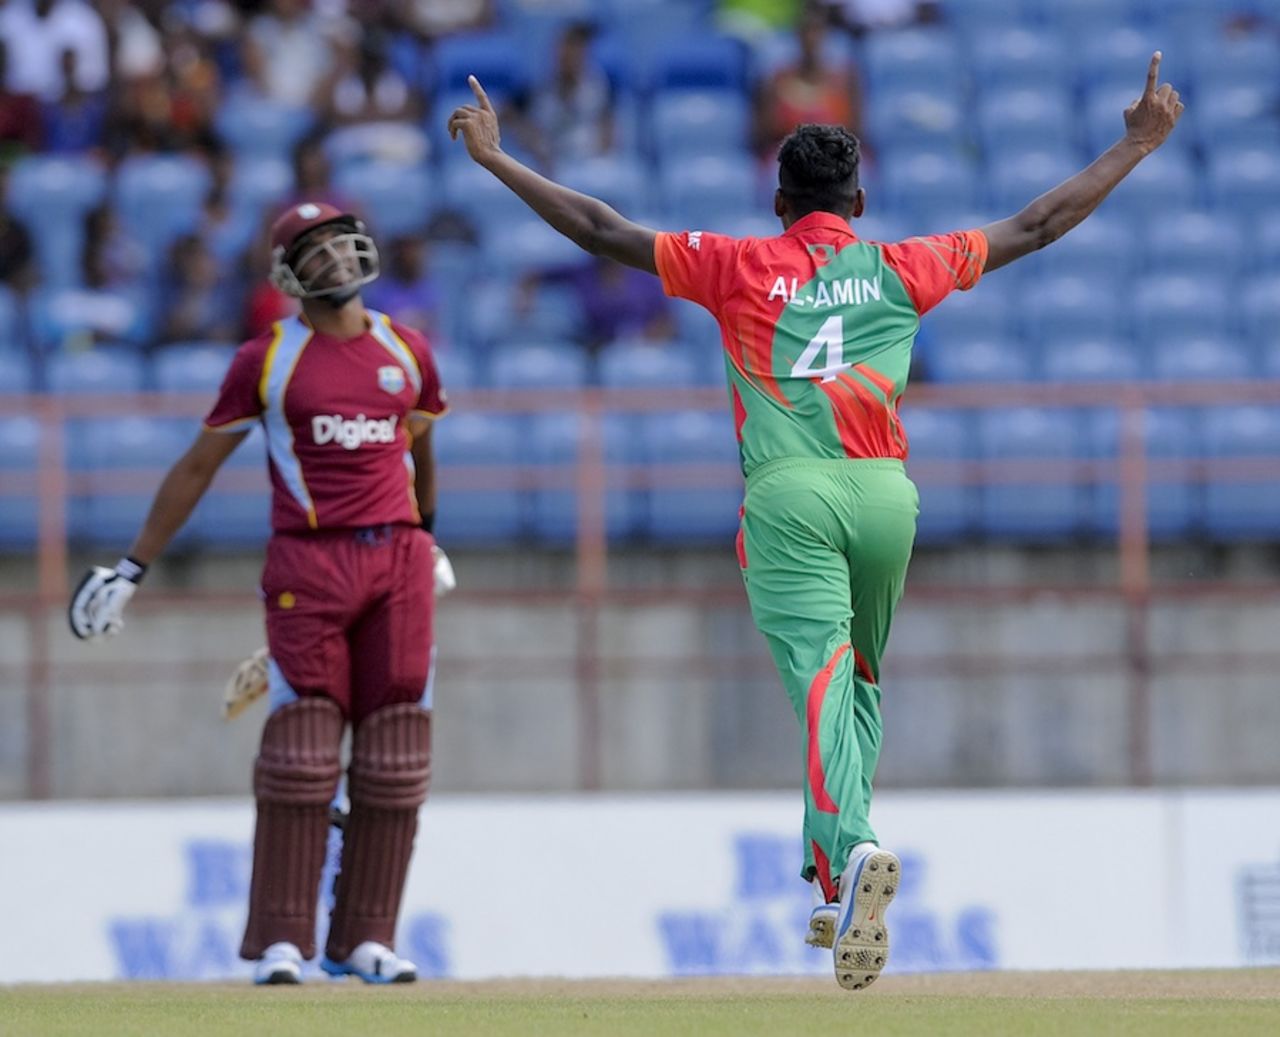 AL-Amin Hossain had Dwayne Bravo caught, West Indies v Bangladesh, 1st ODI, St George's, August 20, 2014